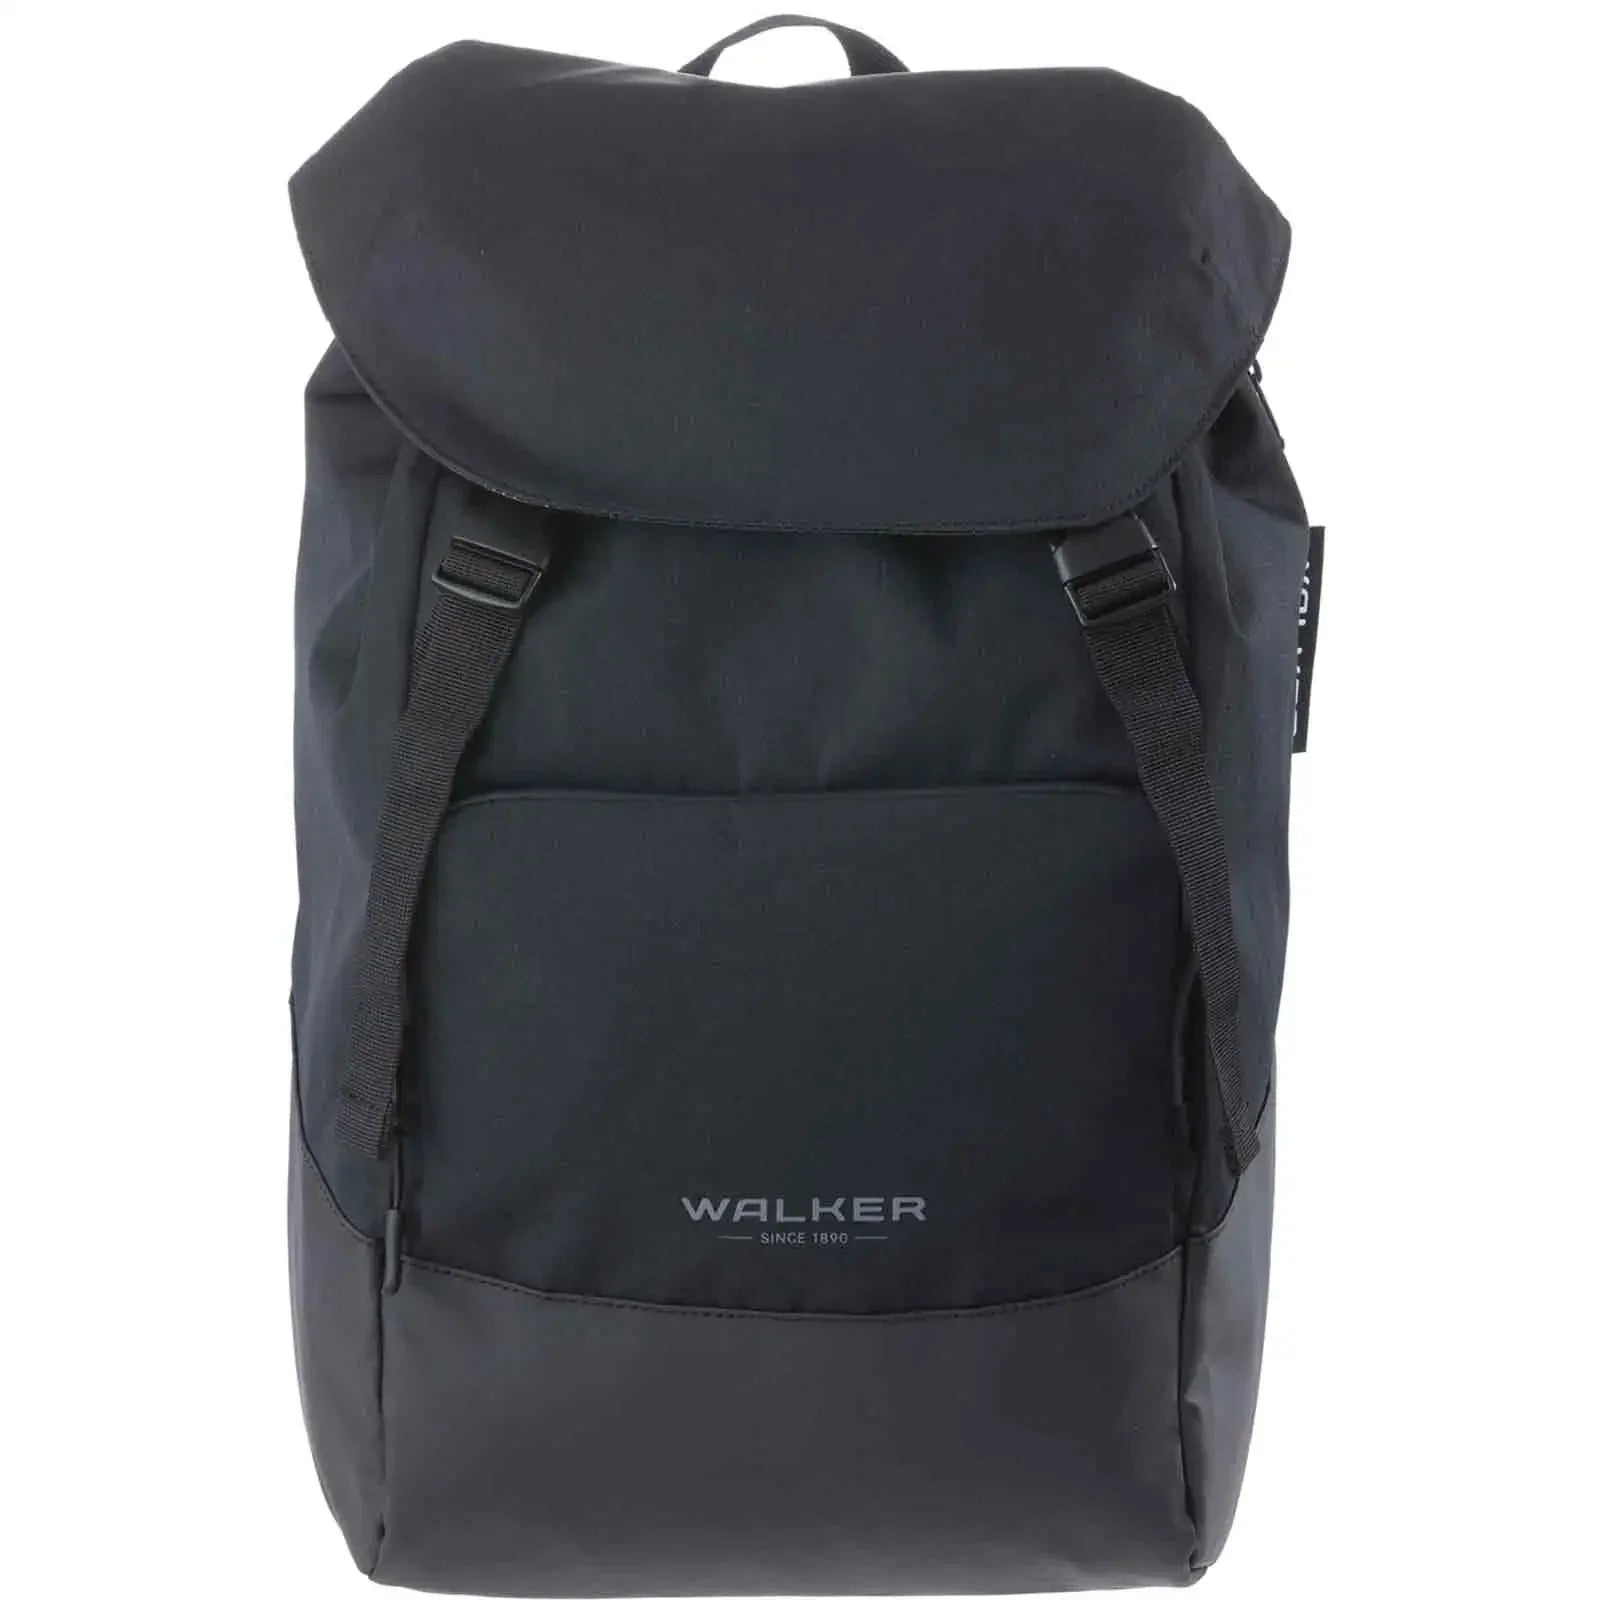 Walker Sol Concept Lifestyle Backpack 48 cm - Anthracite